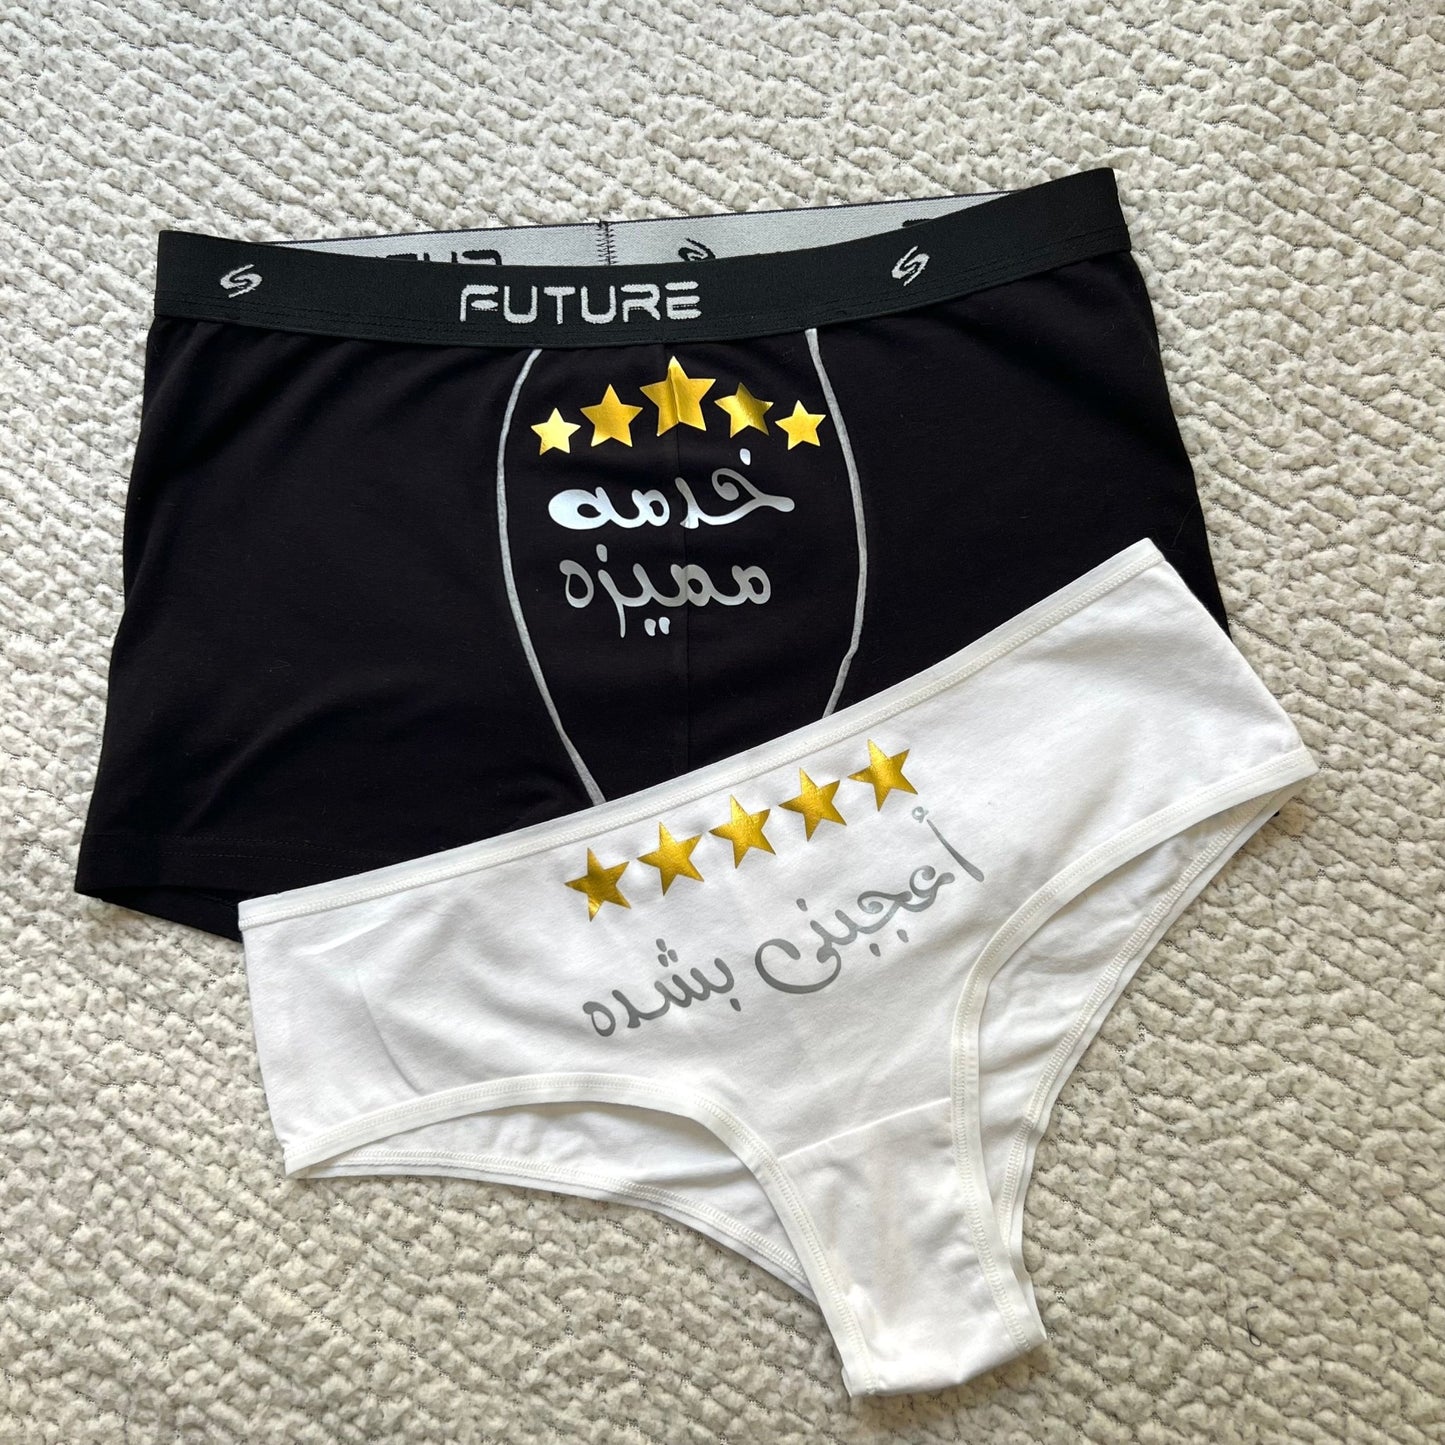 Couple underwear - 5 Stars - Etba3lly